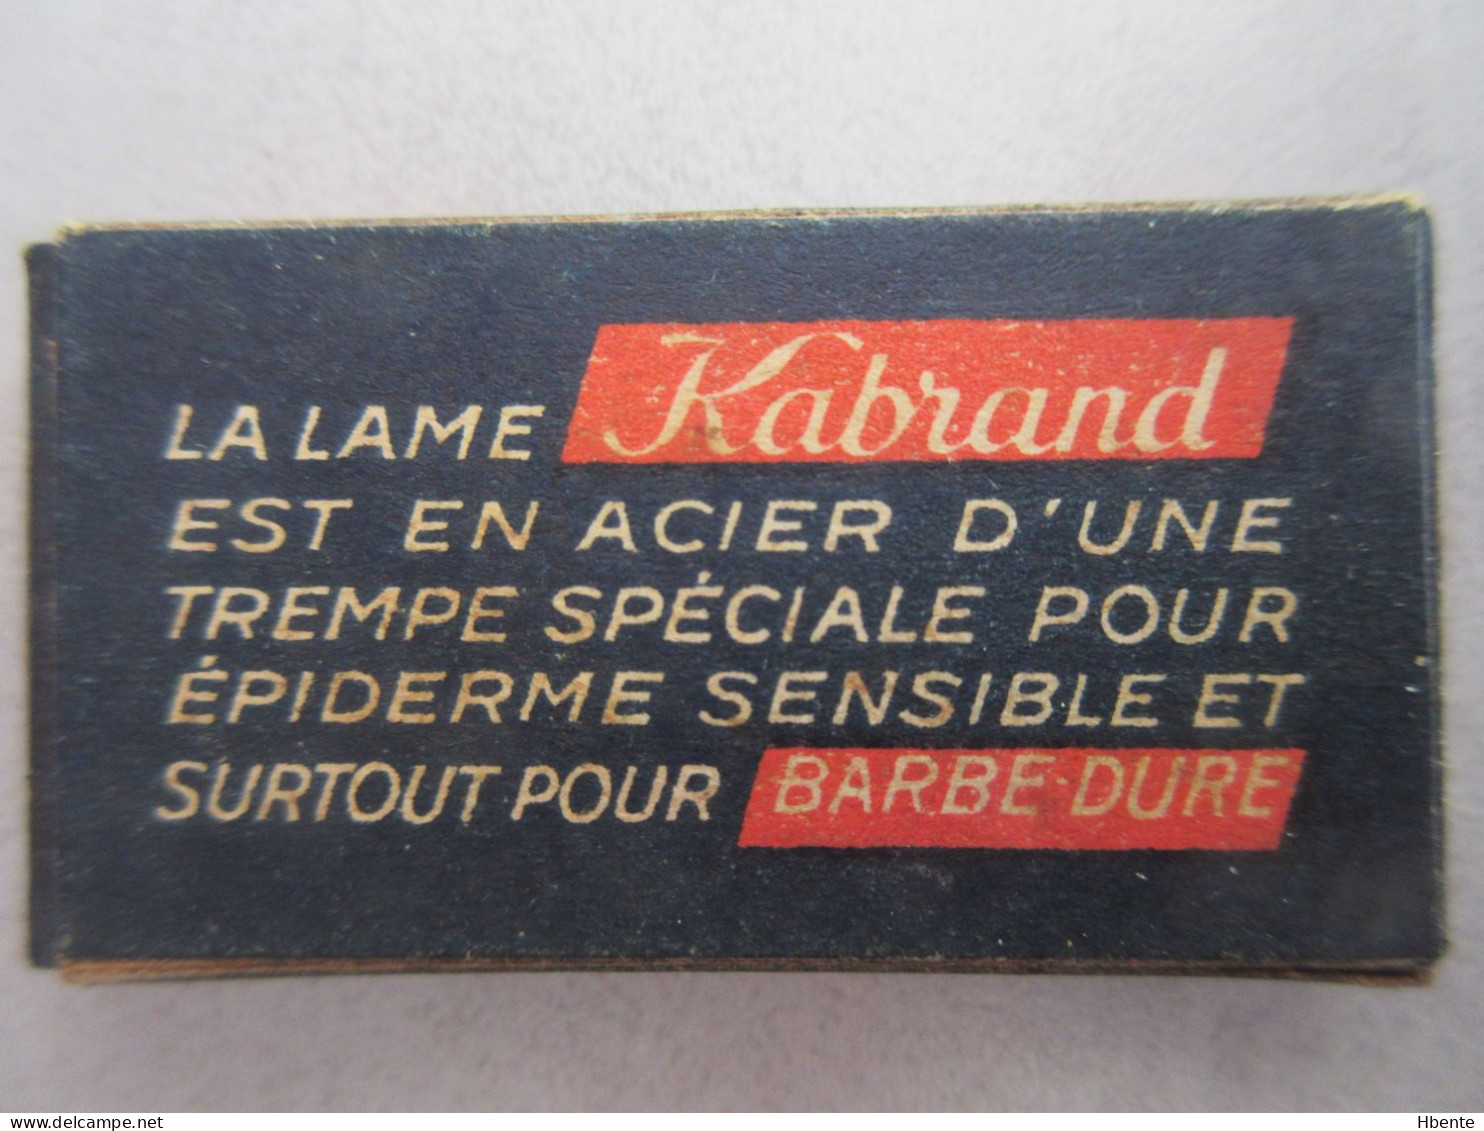 Boite Complète De 5 Lames De Rasoir KABRAND - Complet Box Of 5 Rasor Blades - Lamette Da Barba